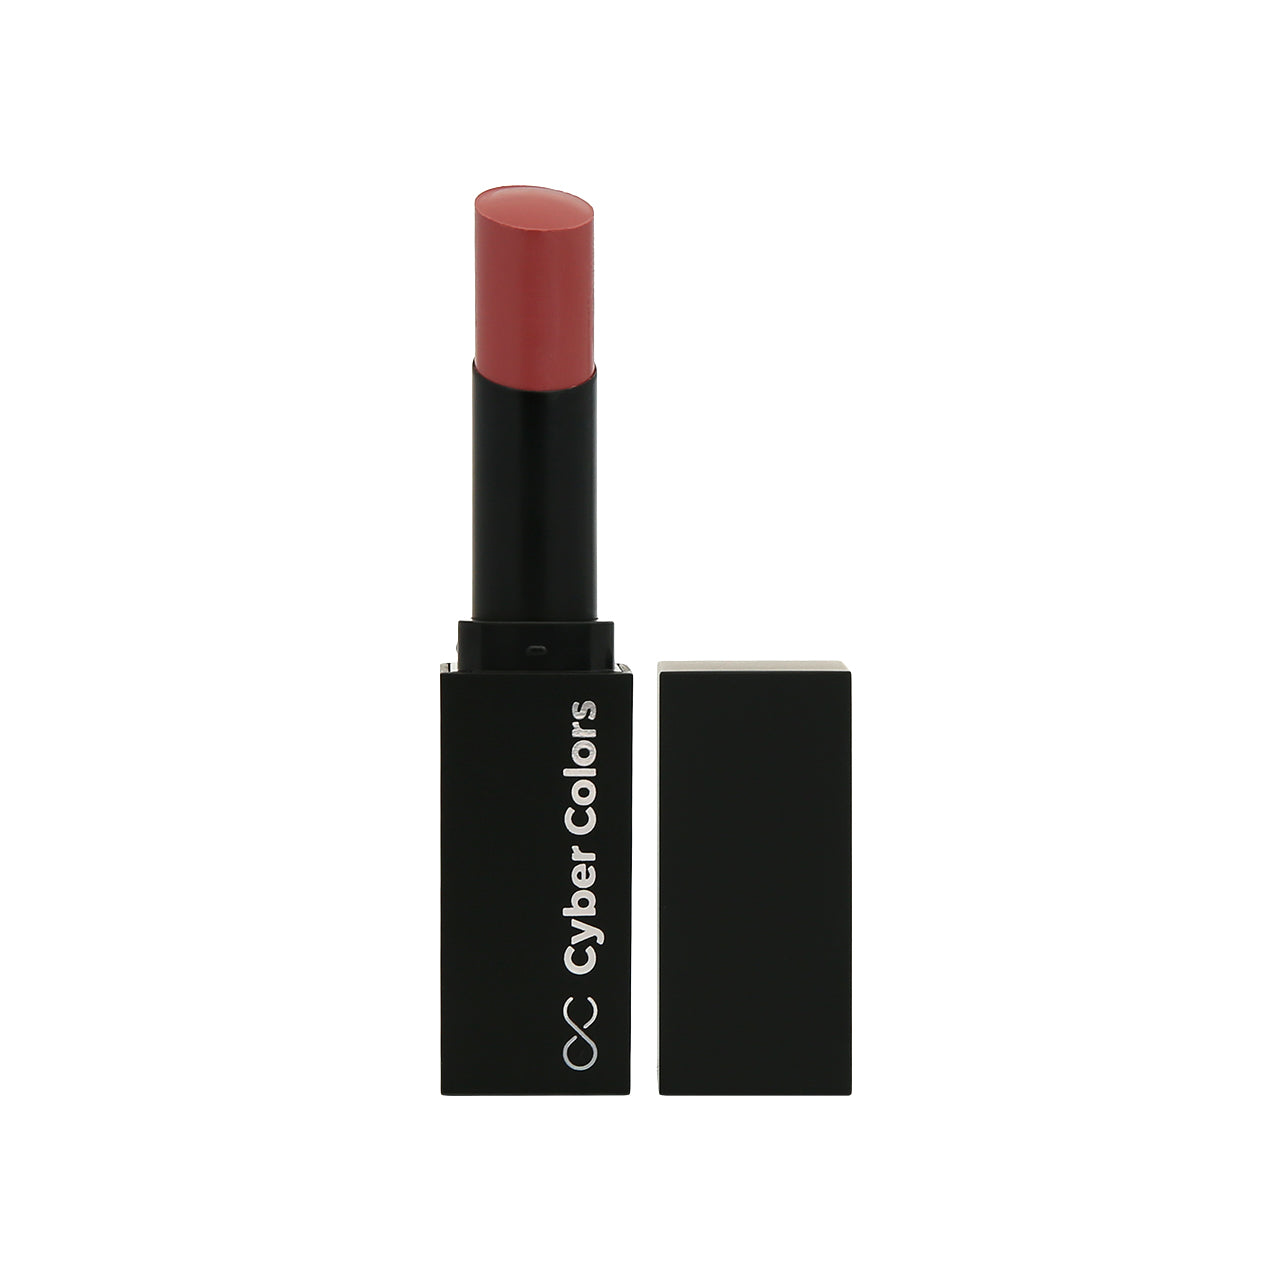 Cyber Colors Luminous Glossy Lipstick #L2 Rosy Beige 5.2g